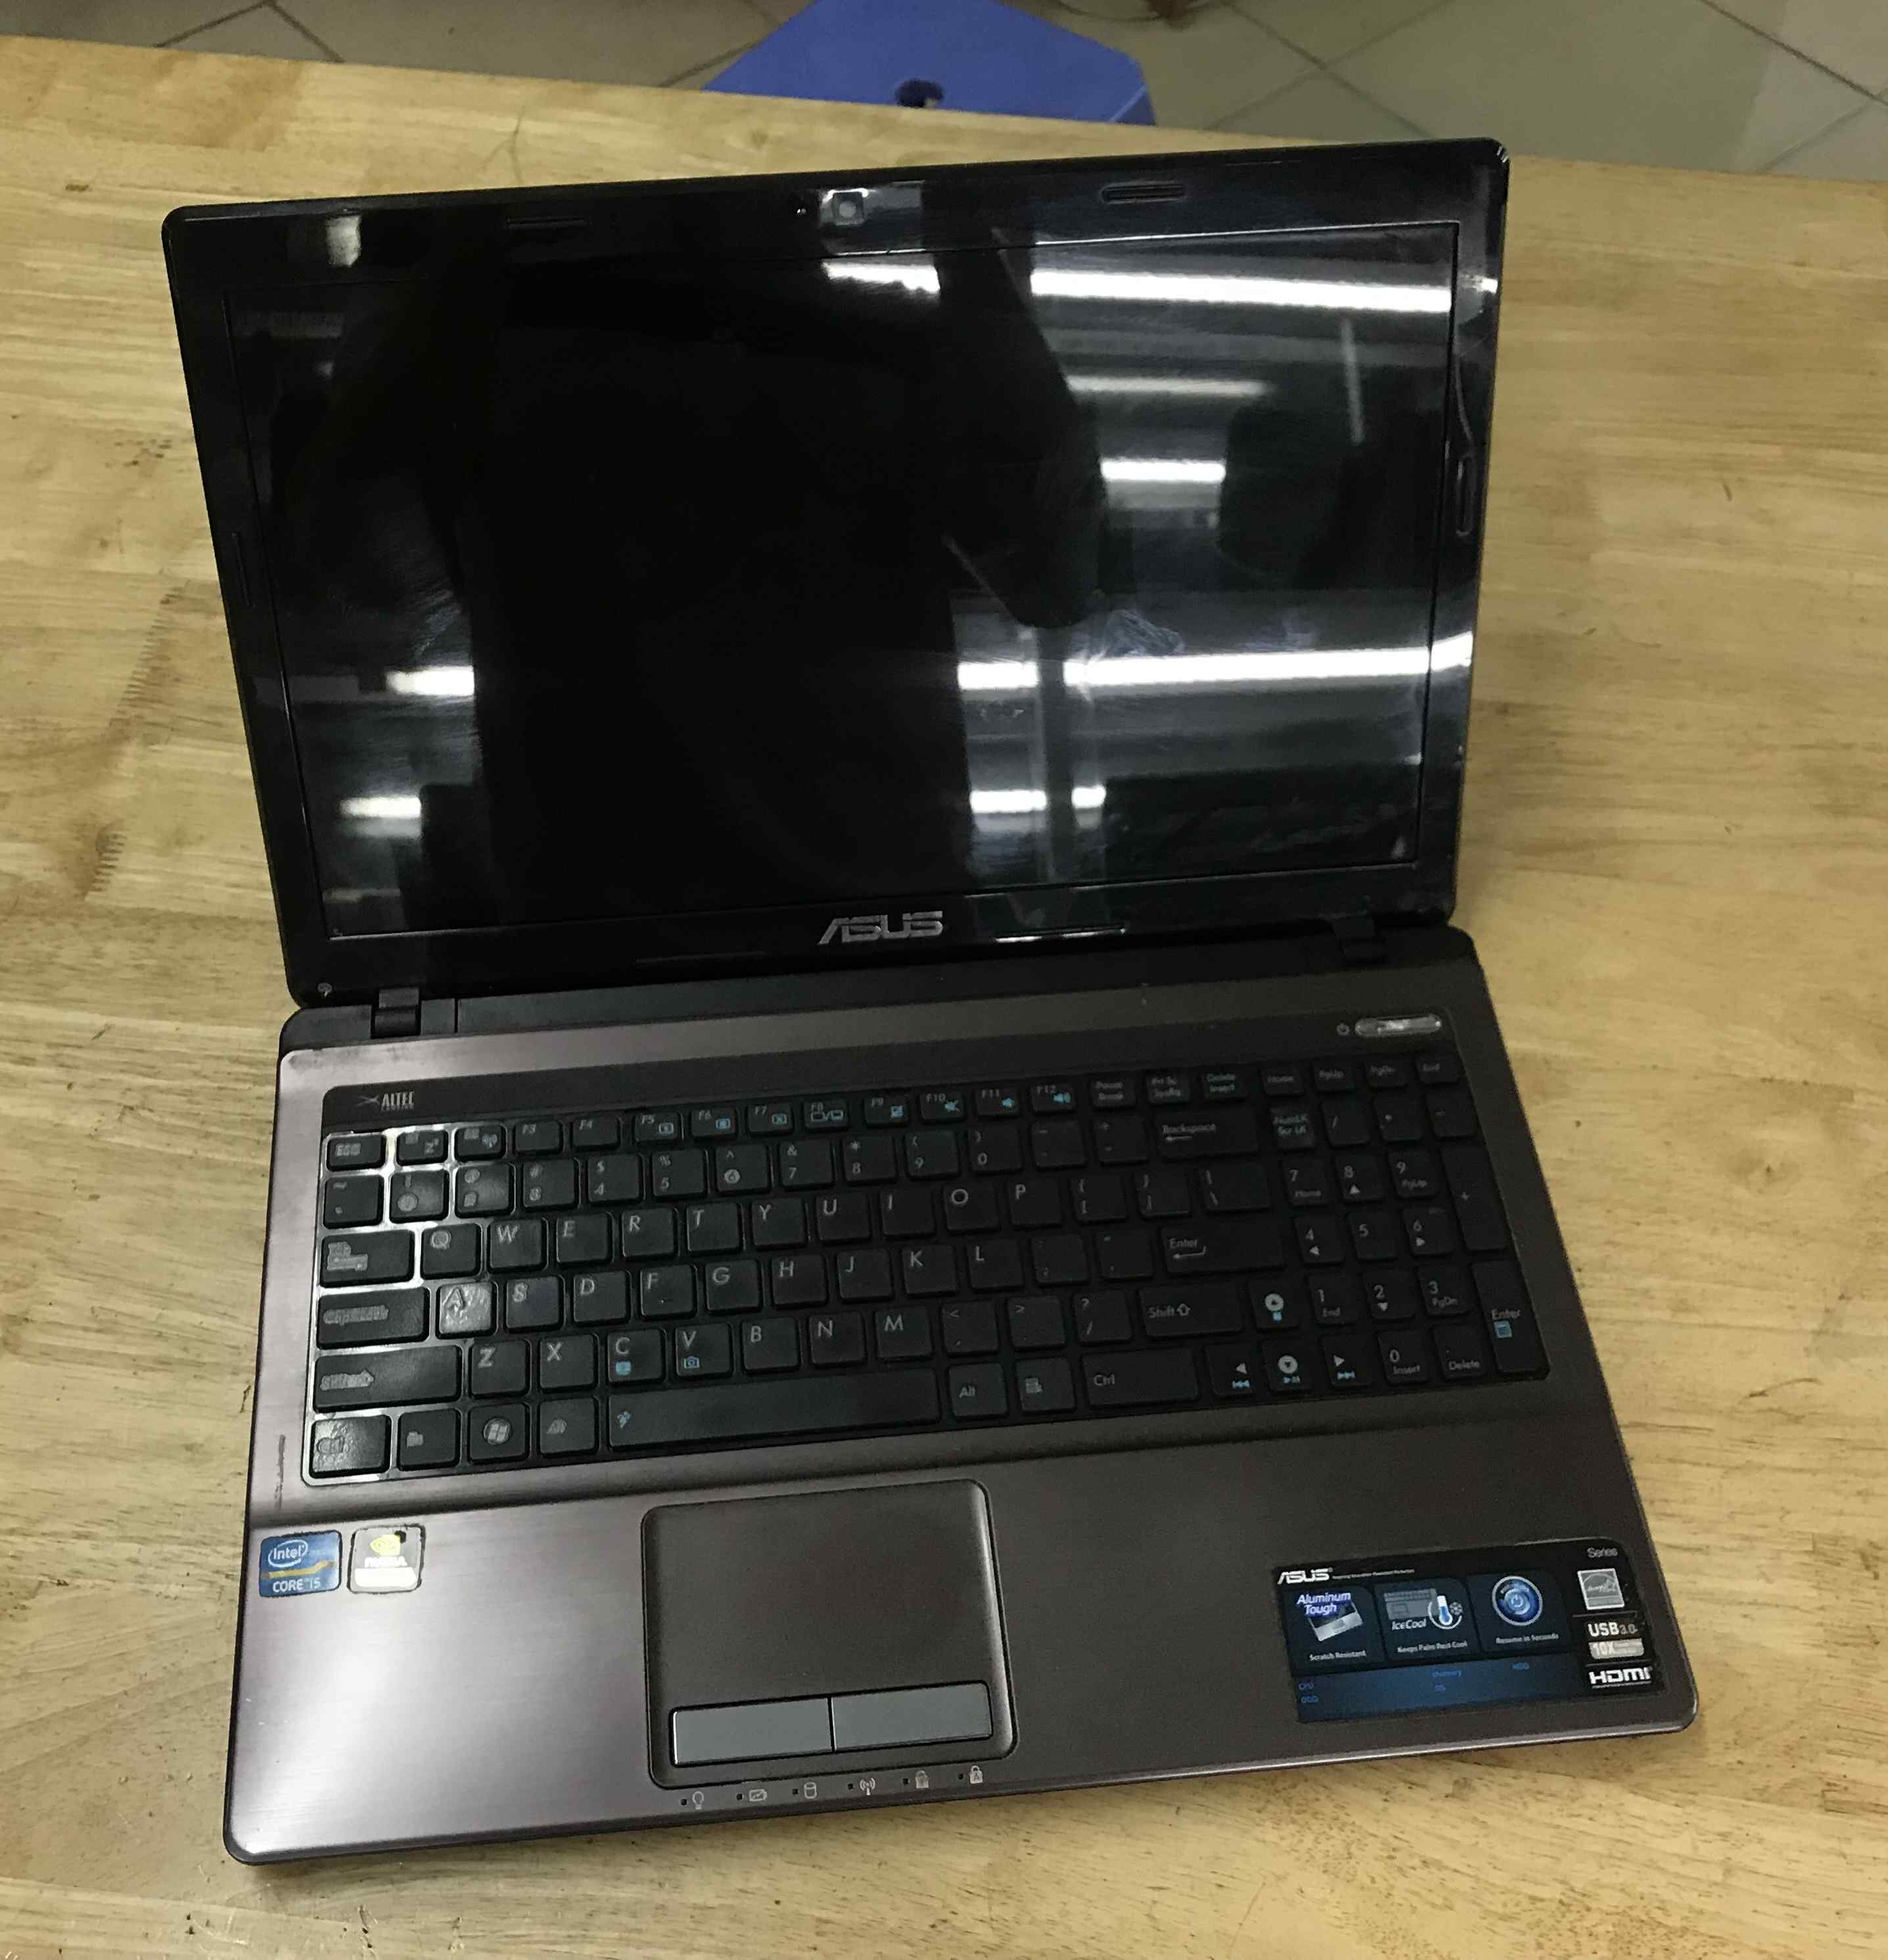 Bán Laptop cũ Asus k53s giá rẻ